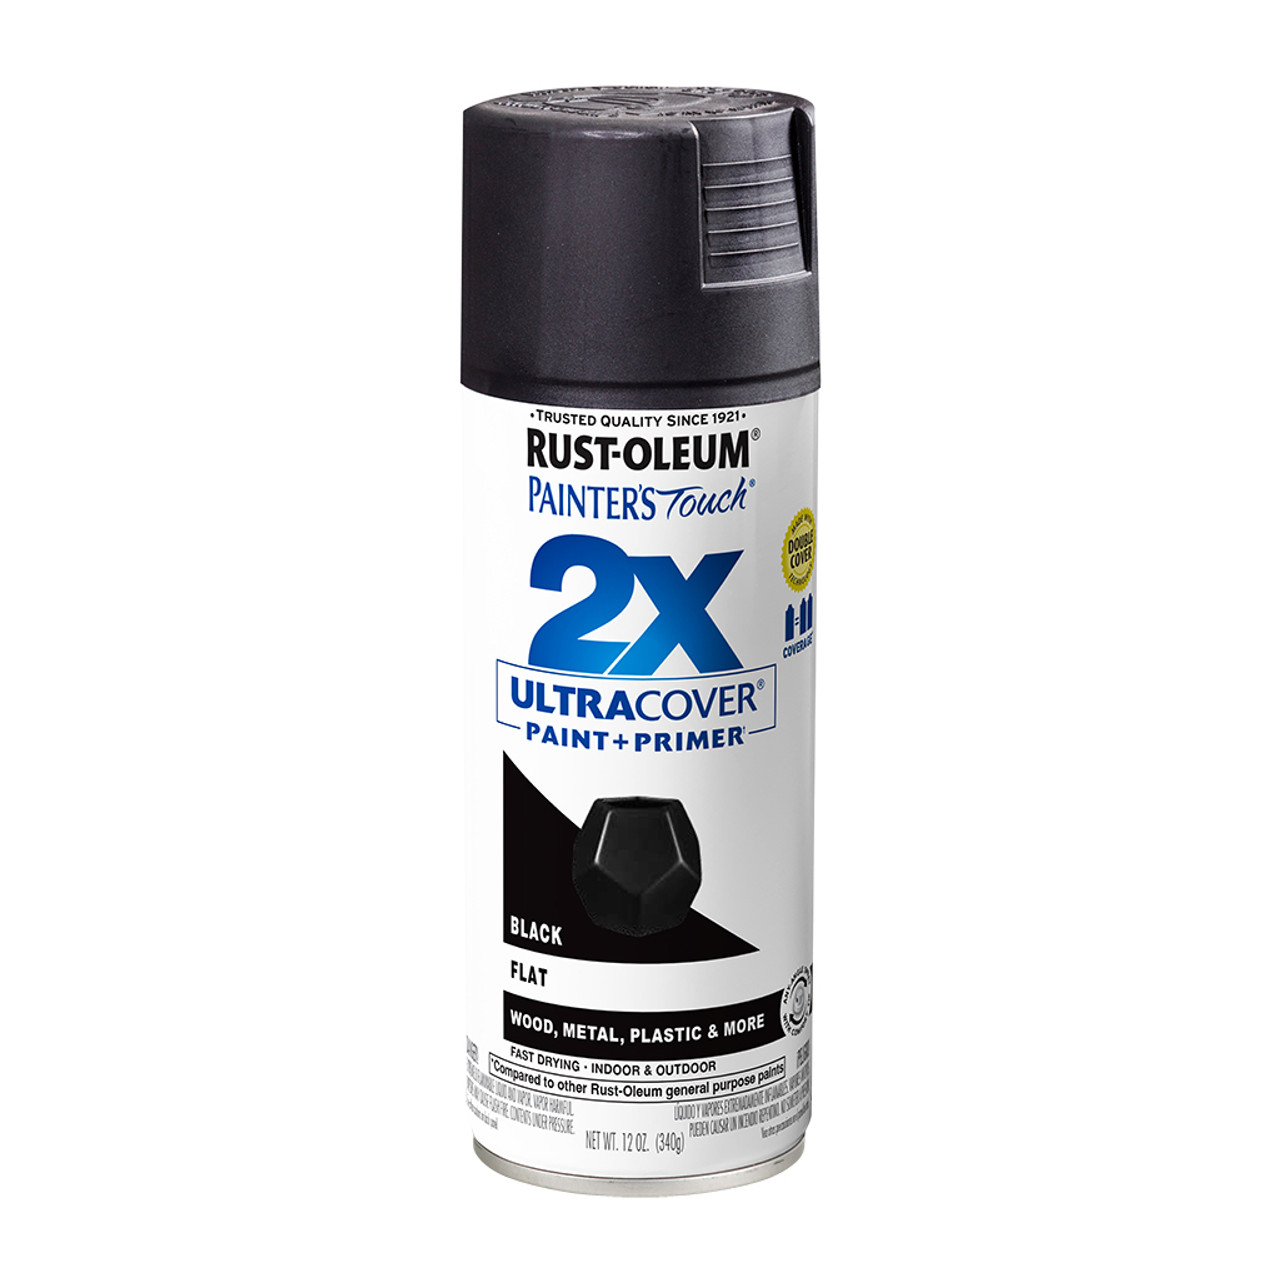 12 oz. Flat Light Gray Automotive Primer Spray